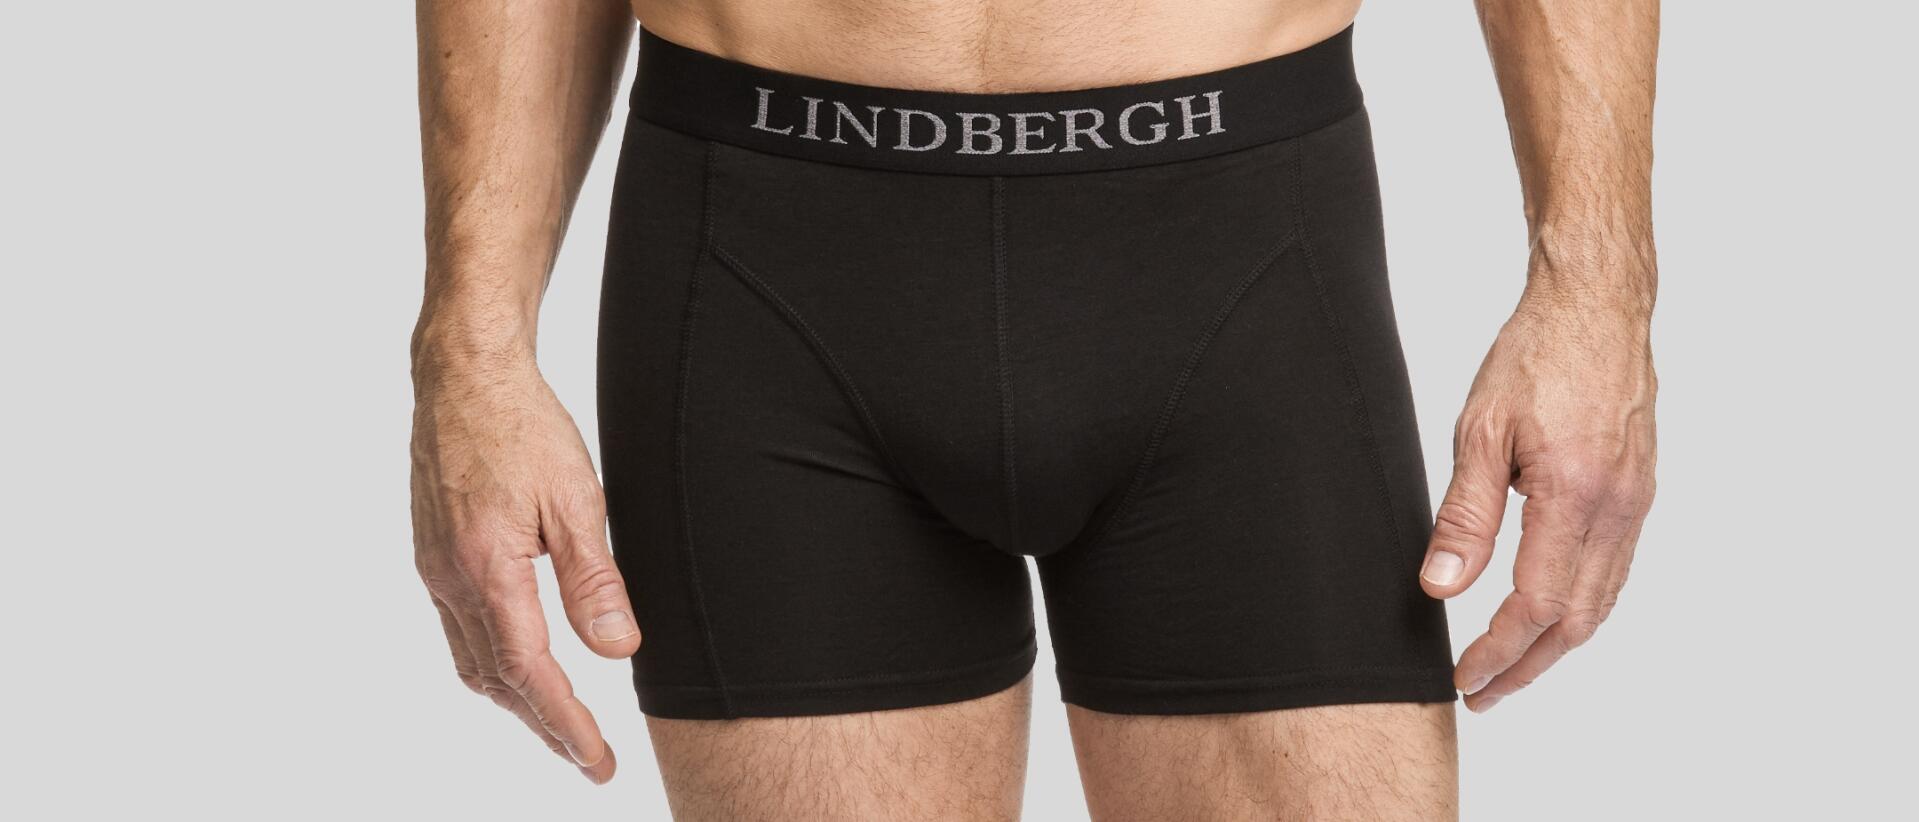 Model i sorte Lindbergh tights